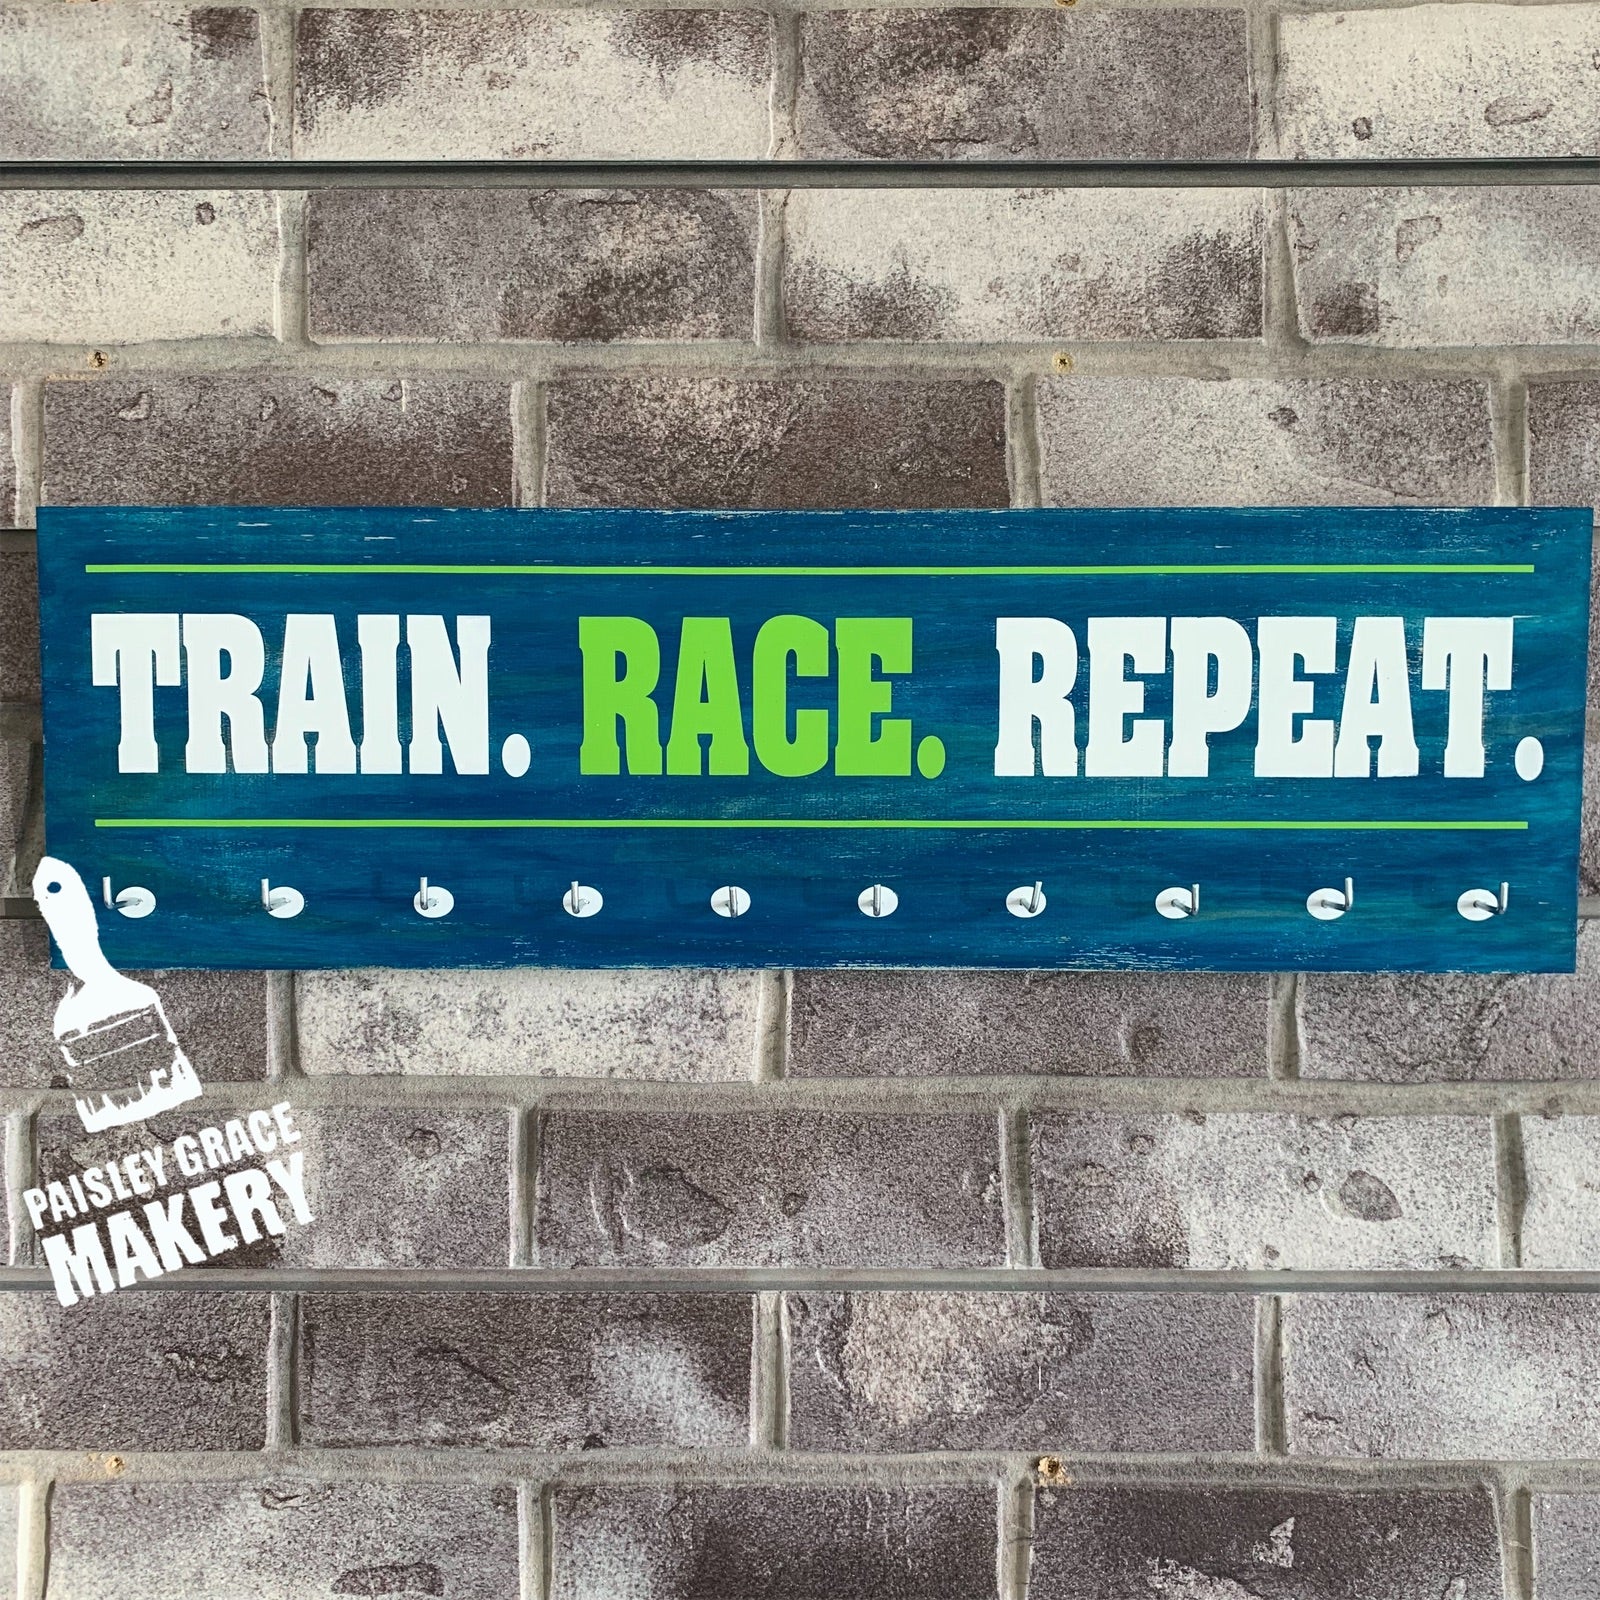 TRAIN. RACE. REPEAT.: Medal Holder - Paisley Grace Makery